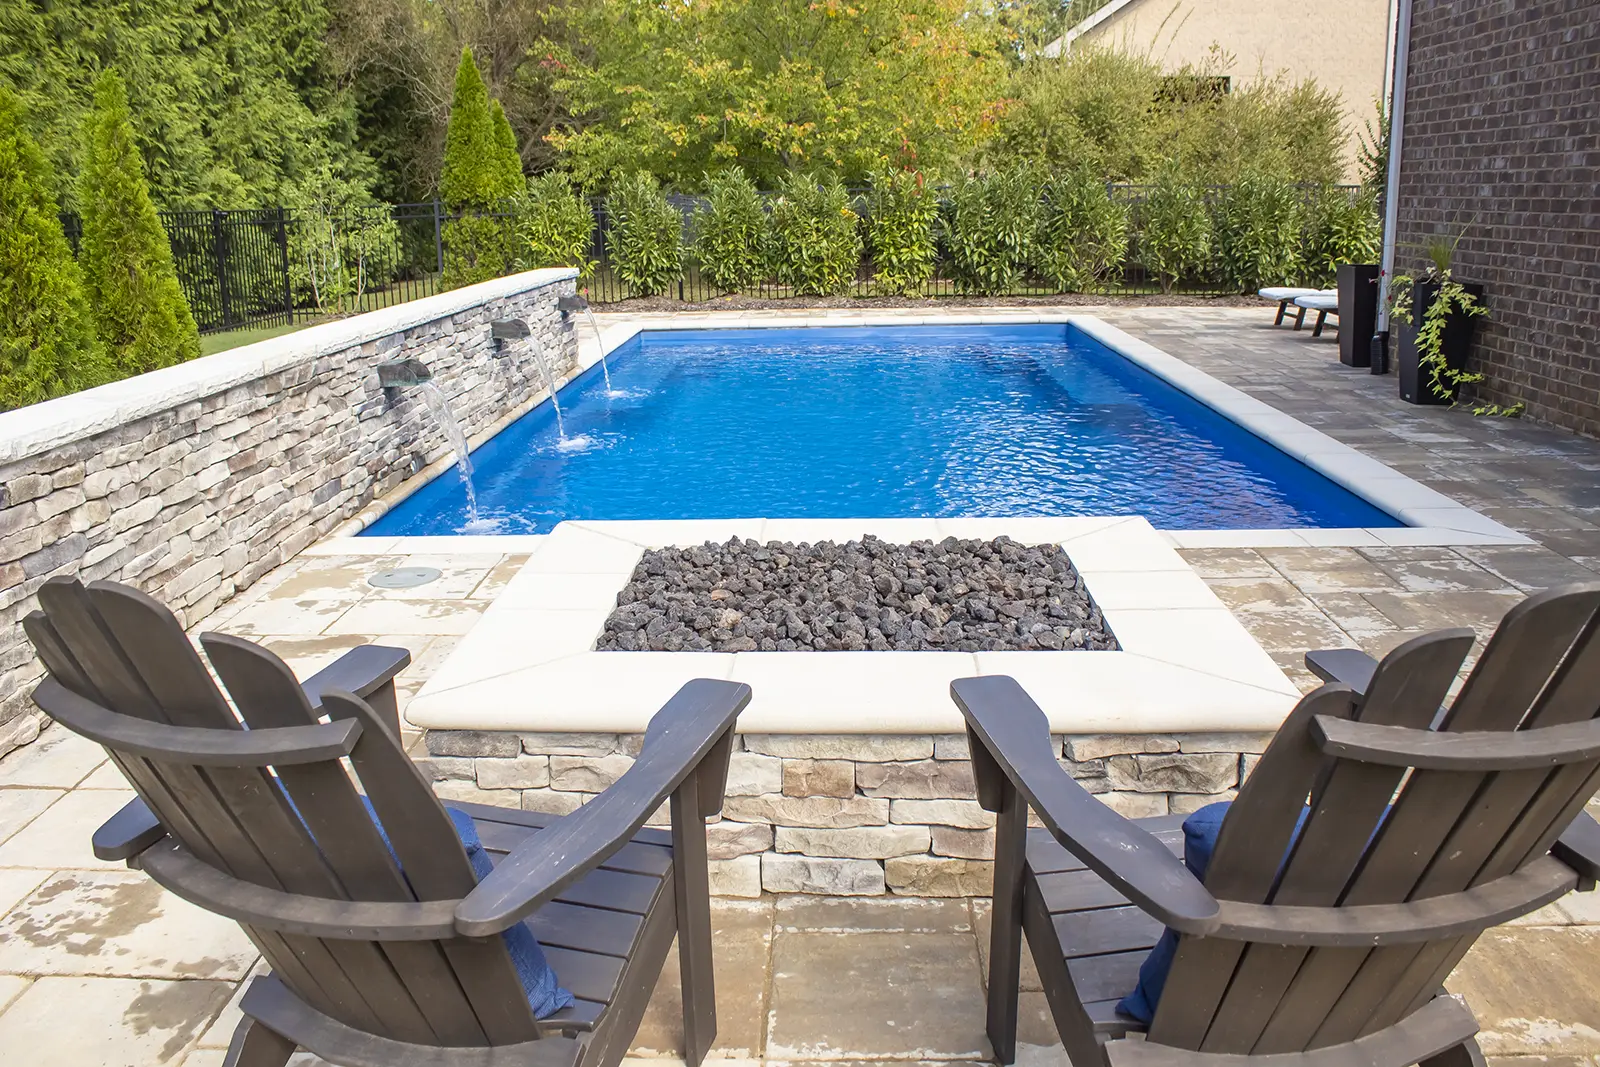 The Leisure Pools Supreme™ - a superb inground pool installation